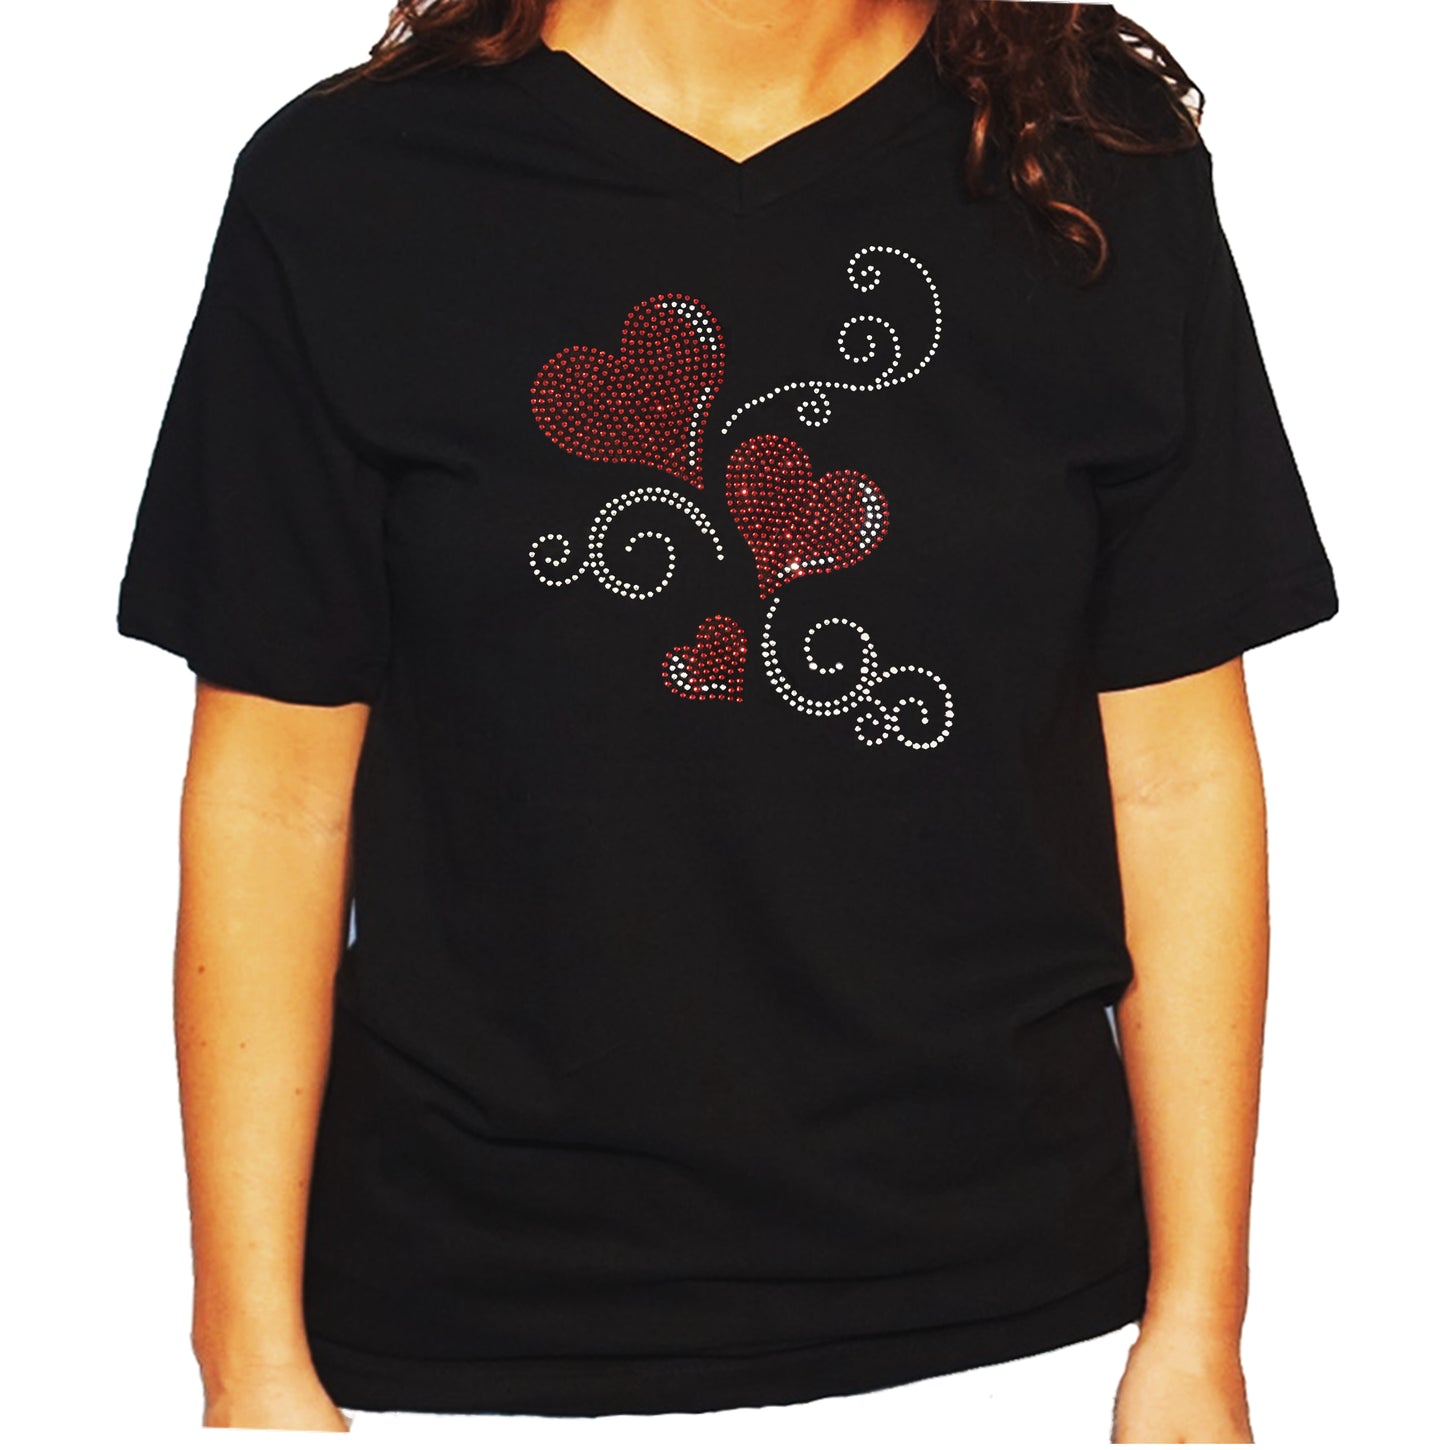 Women's / Unisex T-Shirt with 3 Red Hearts and Swirls in Rhinestones